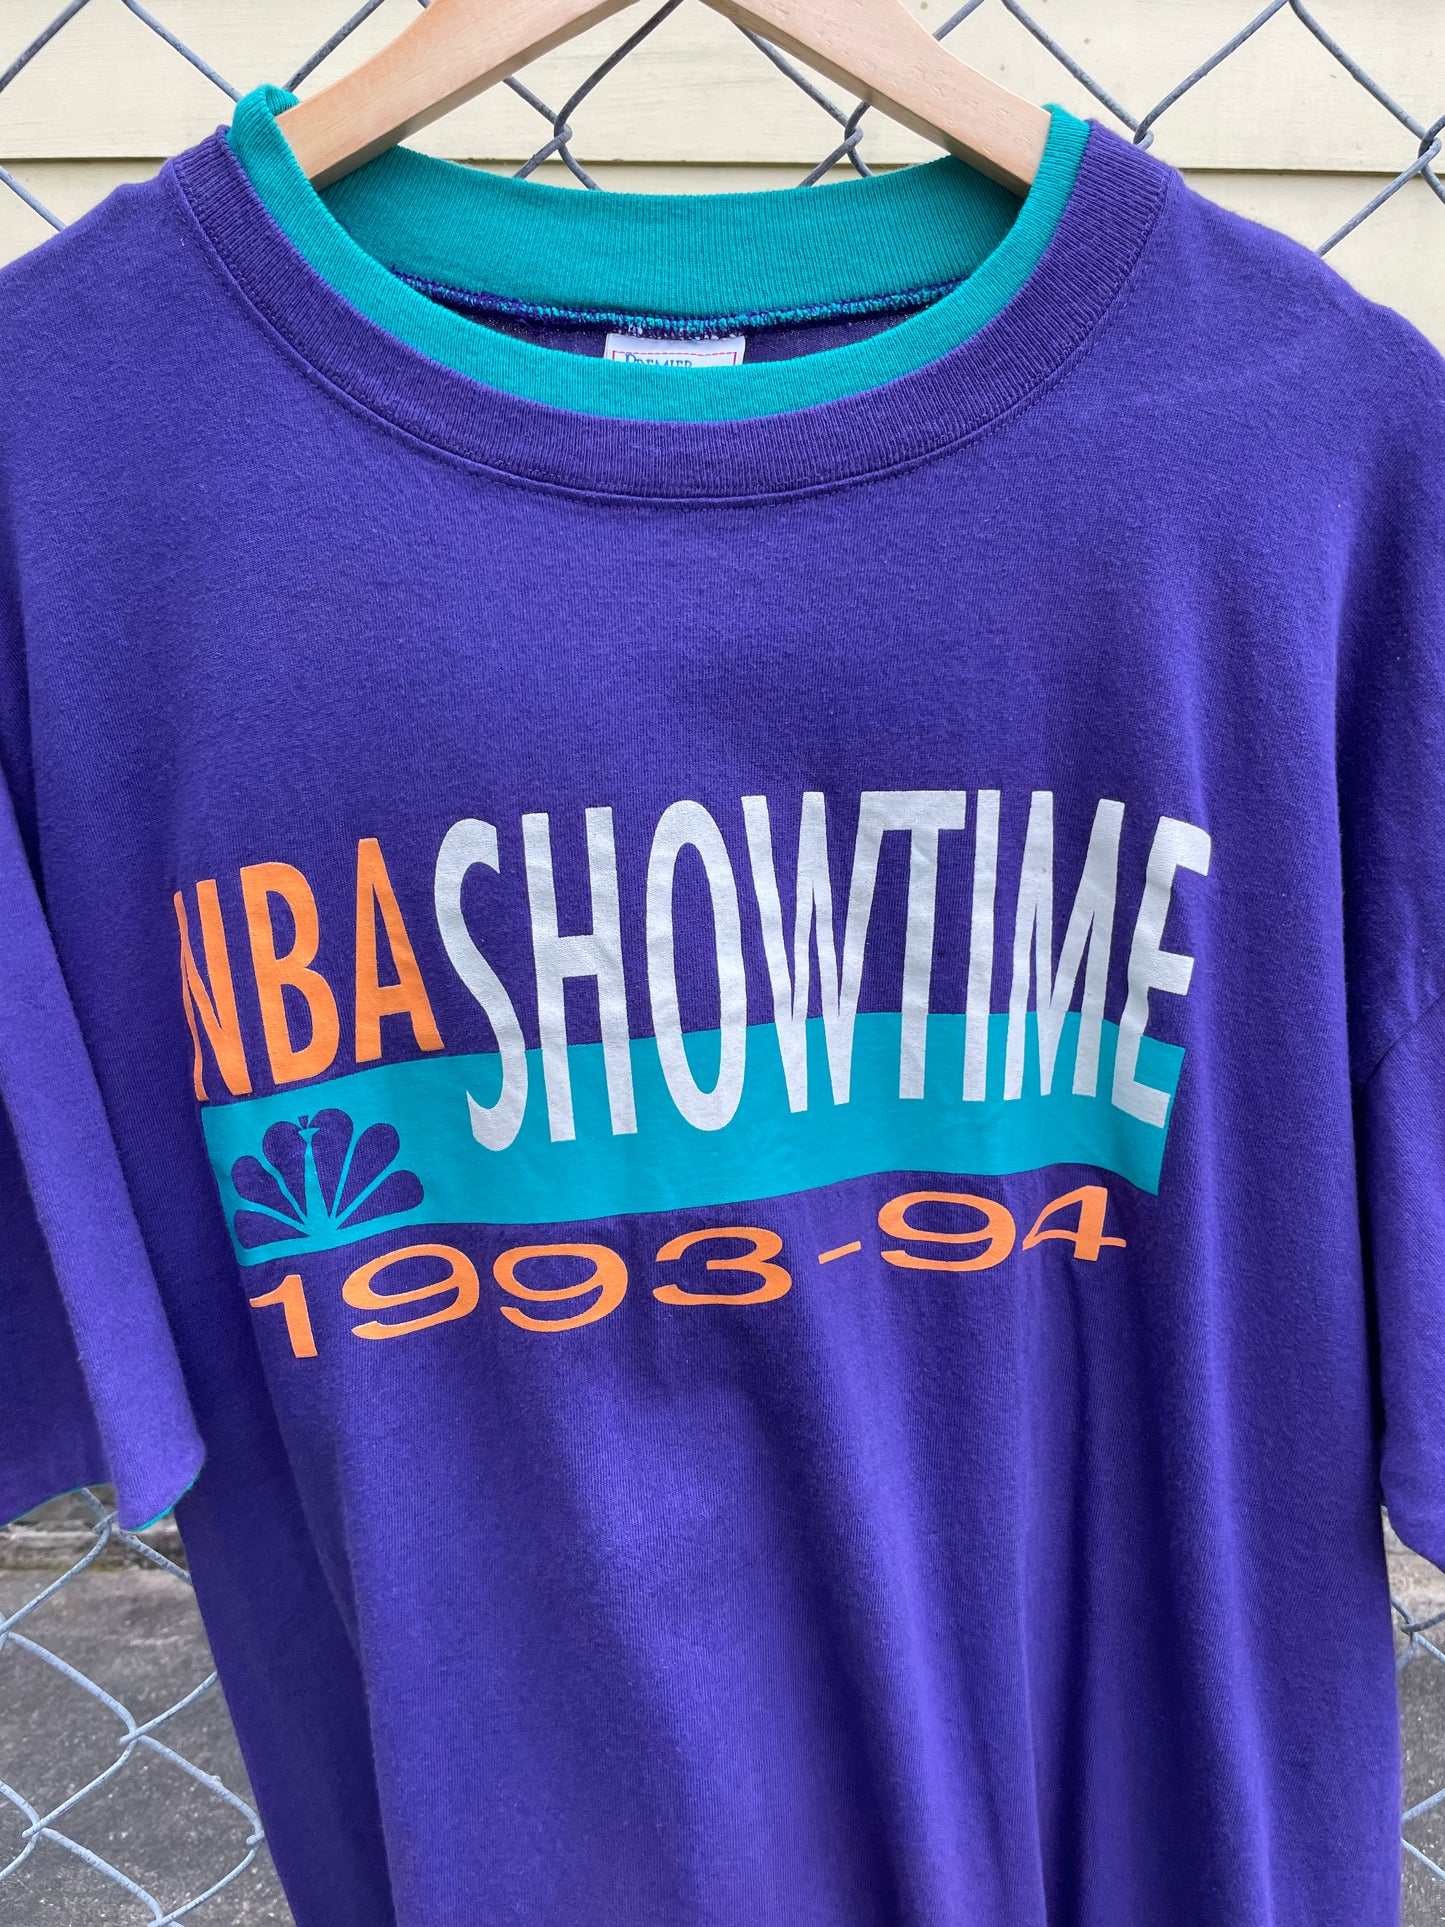 NBA Showtime (XL)